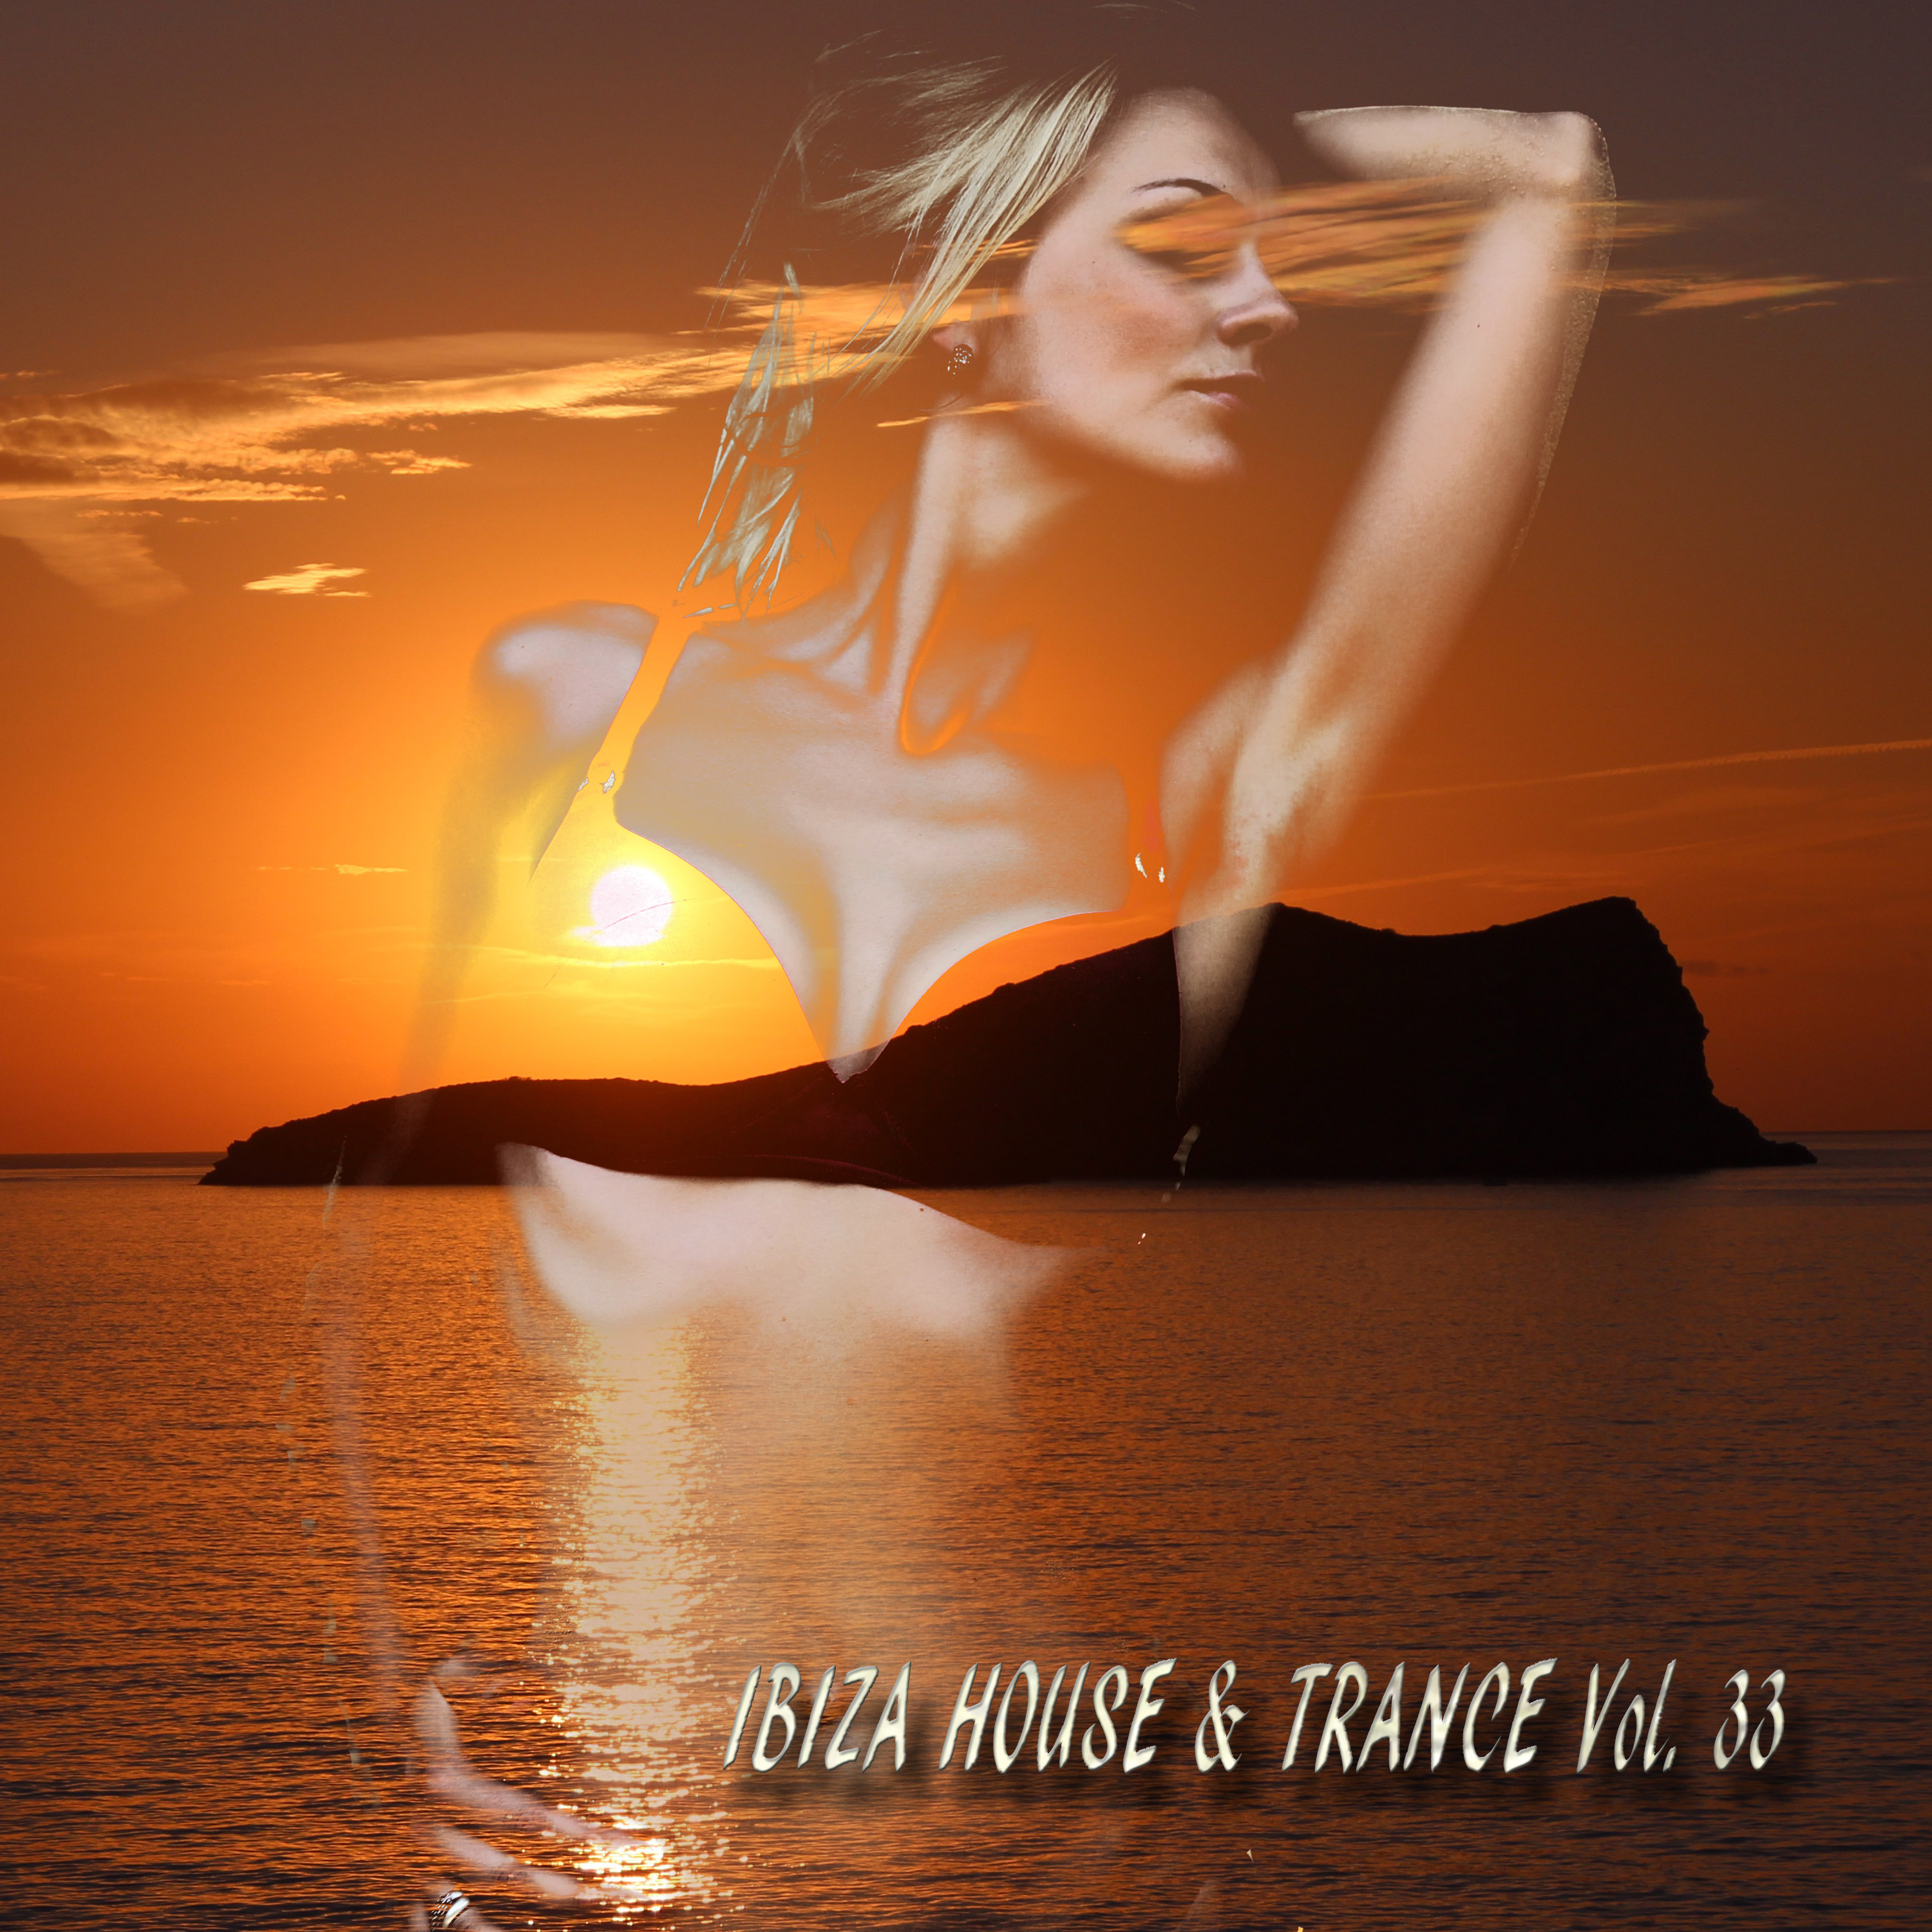 Ibiza House and Trance, Vol. 33